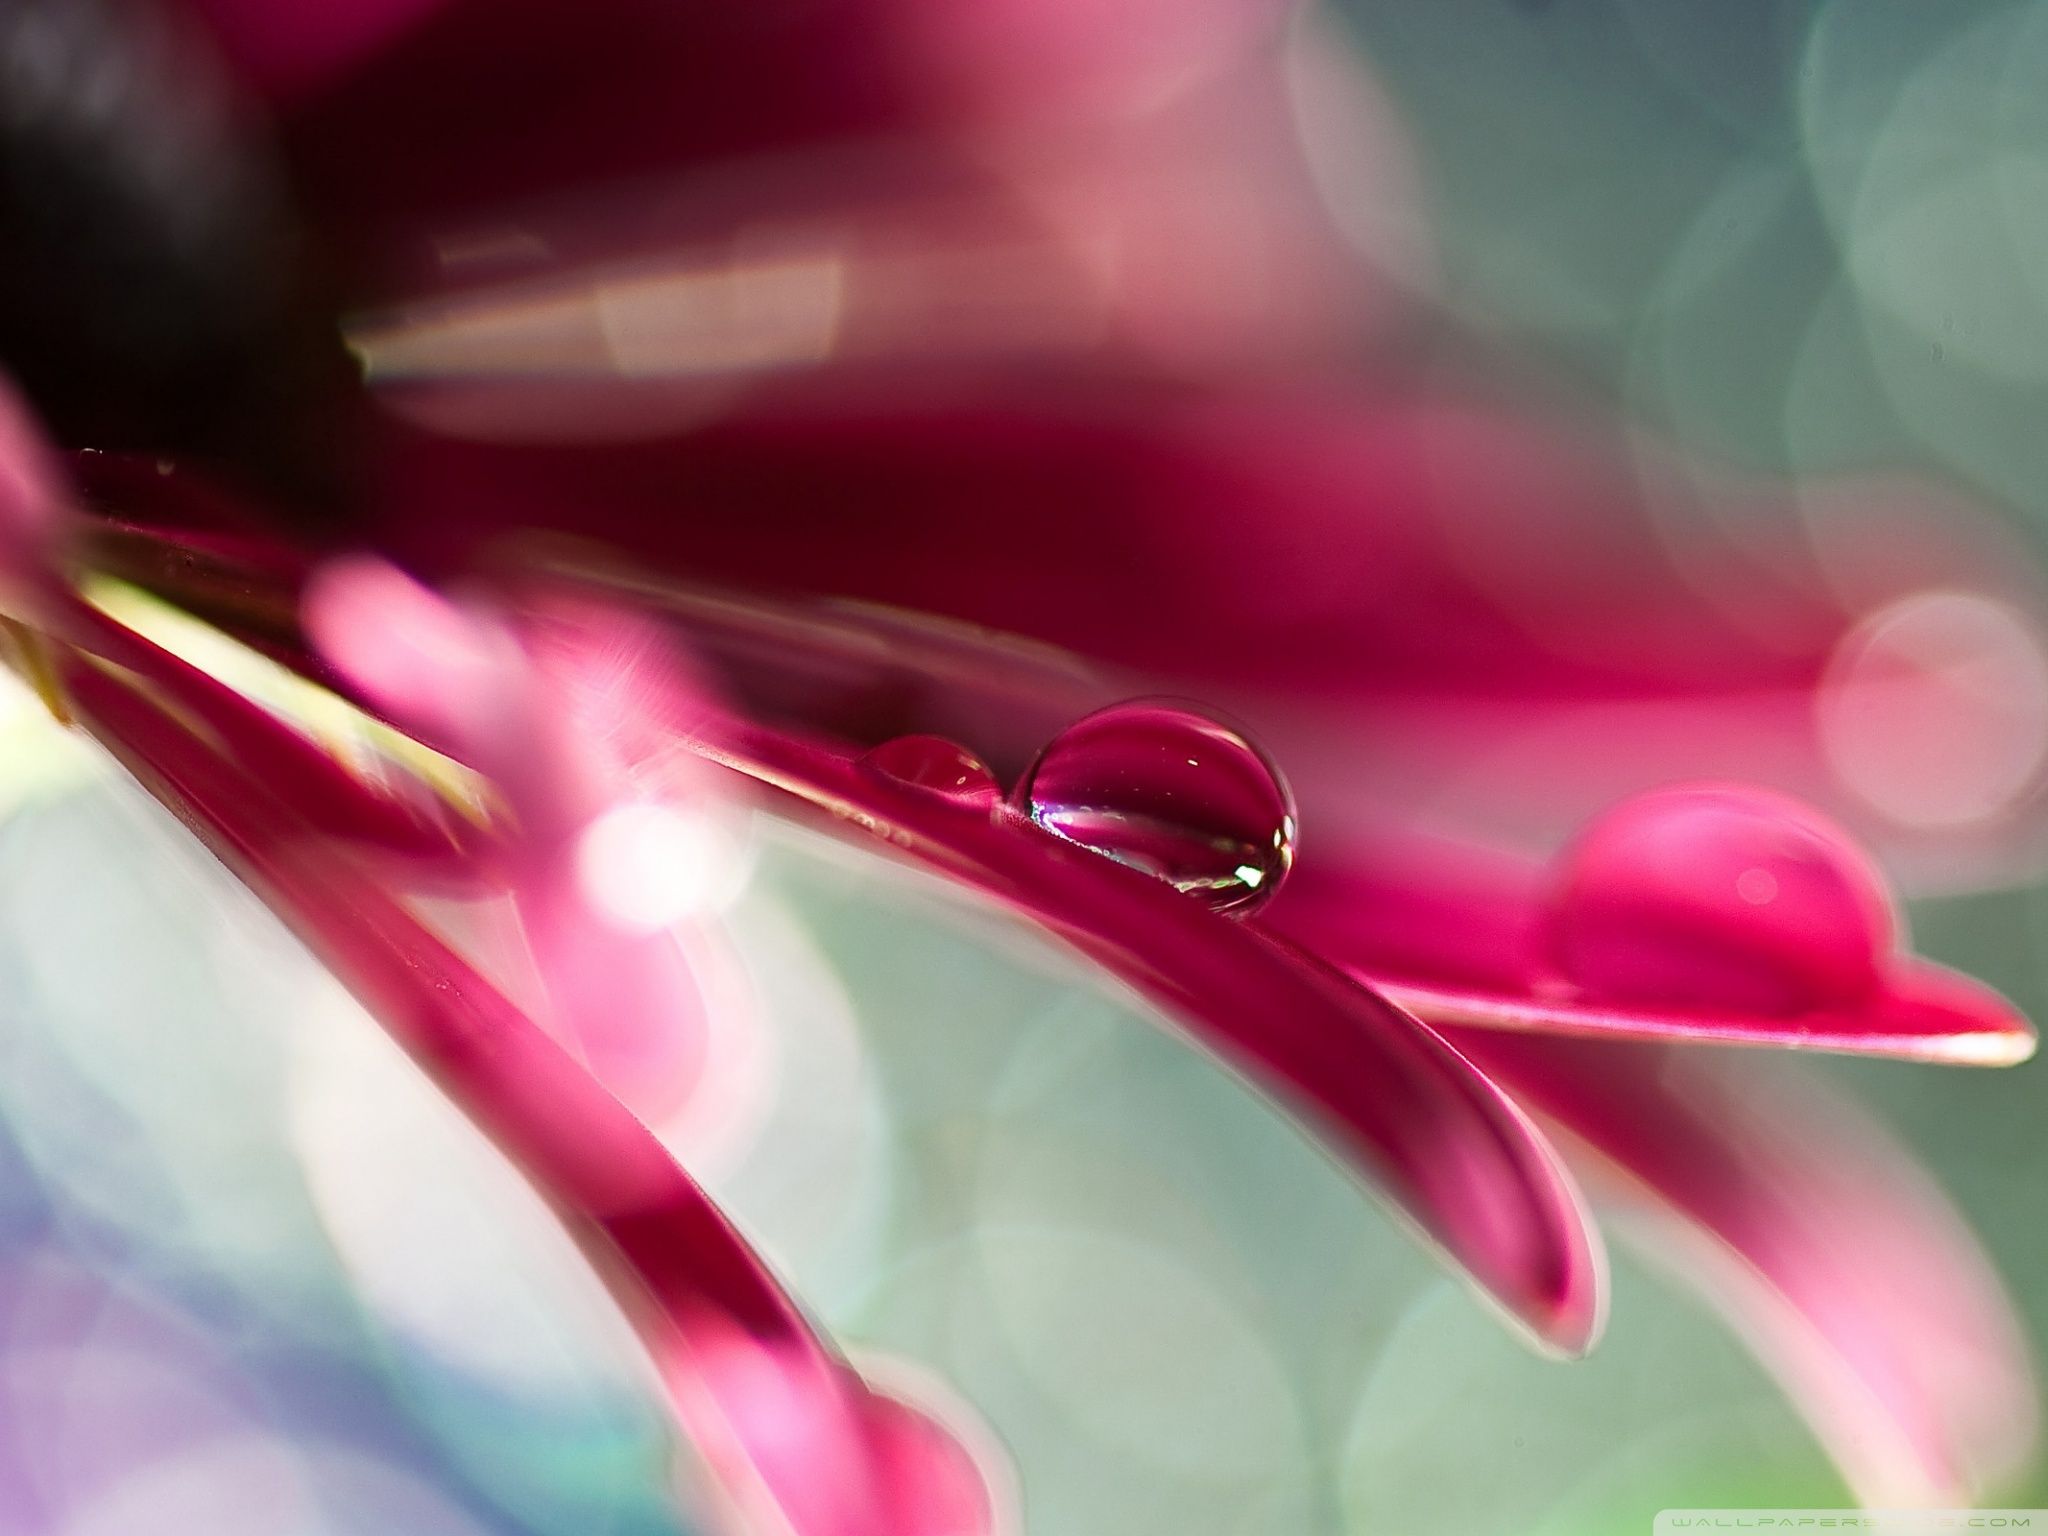 Water Drop On Pink Petal Ultra HD Desktop Background Wallpaper for 4K UHD TV, Tablet